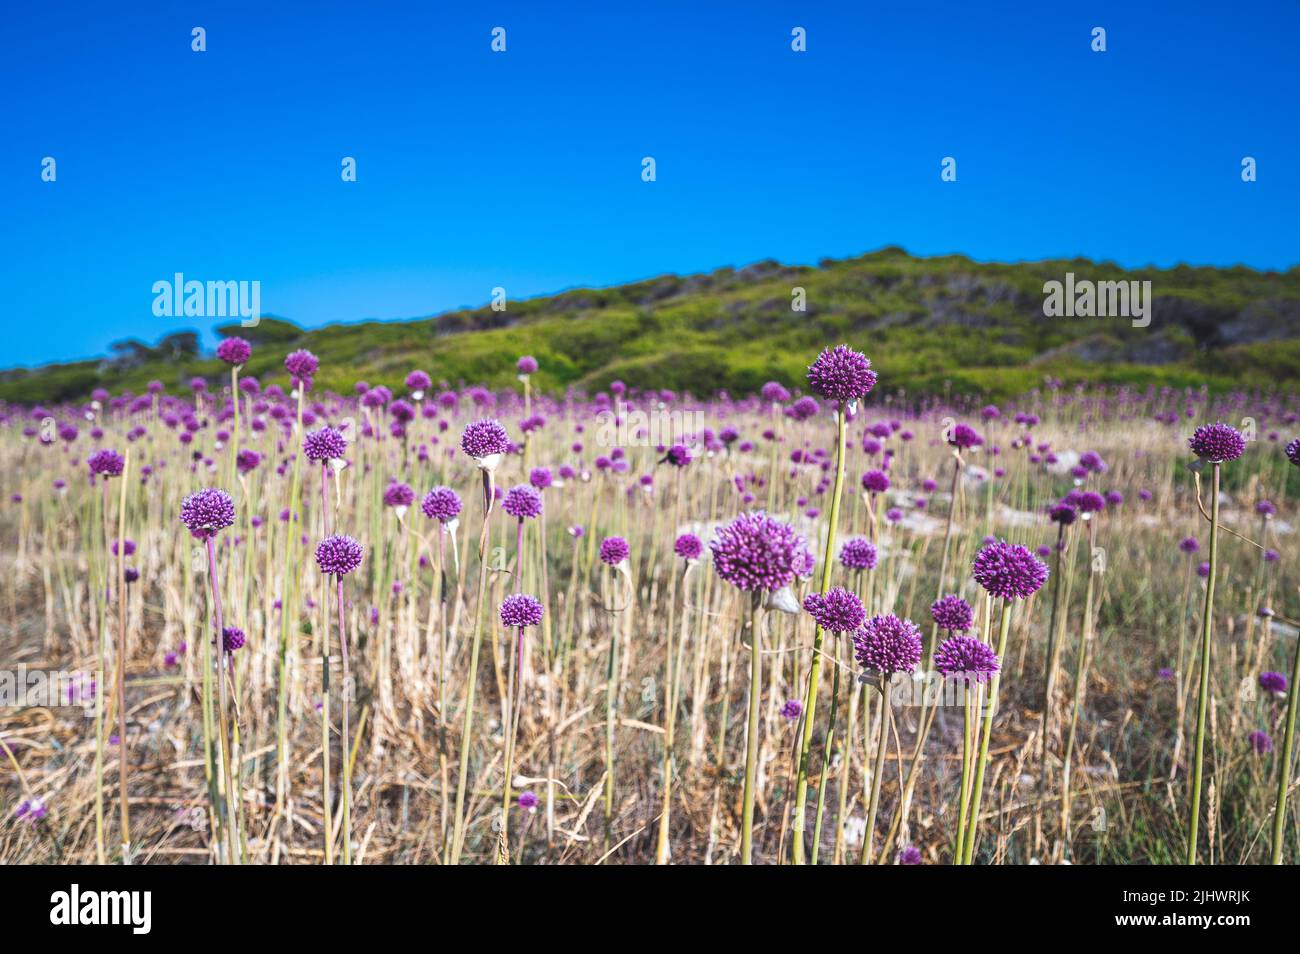 Wild garlic flowers on the Tremiti islands, Italy Stock Photo